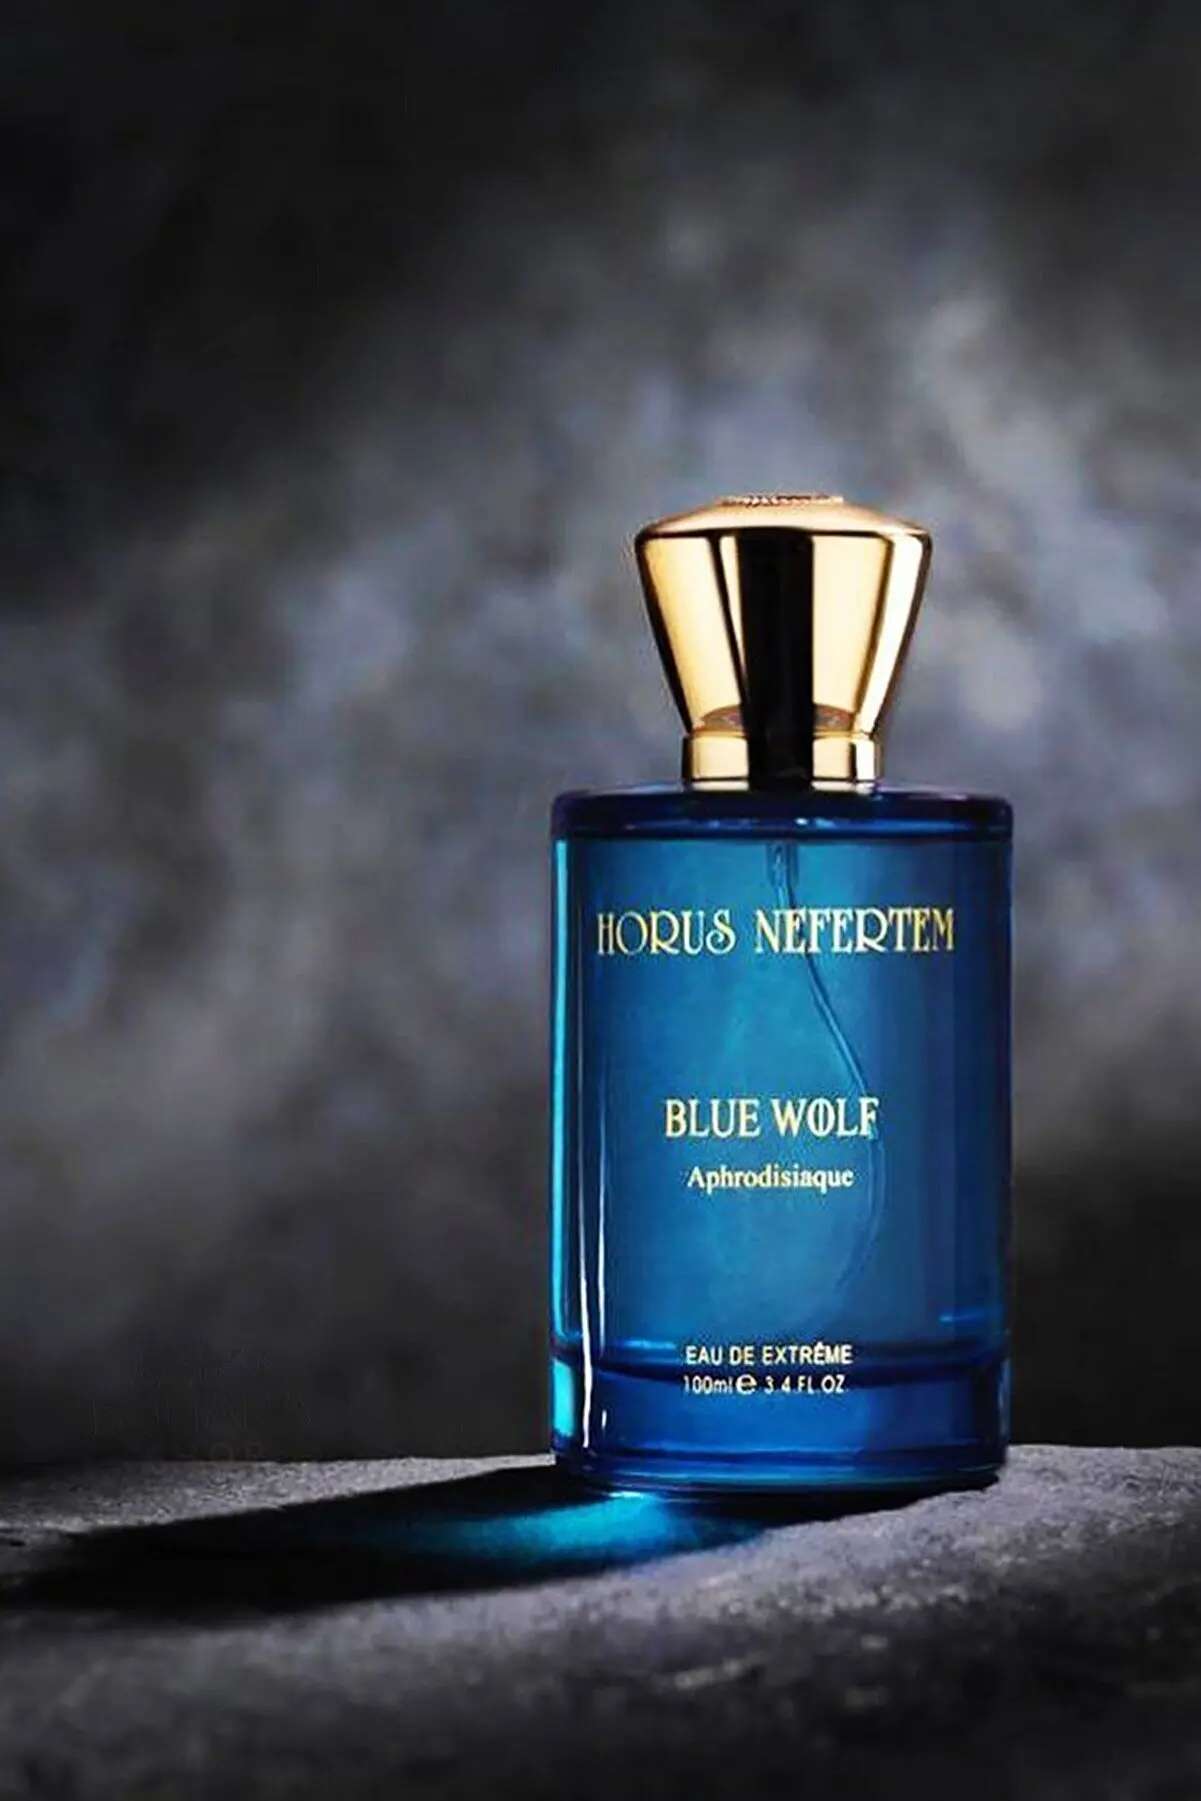 Horus Nefertem Aphrodisiaque Edp BLUE WOLF 100 Ml Classy Men's Aphrodisiac Perfume Tempting Fragrance For Women